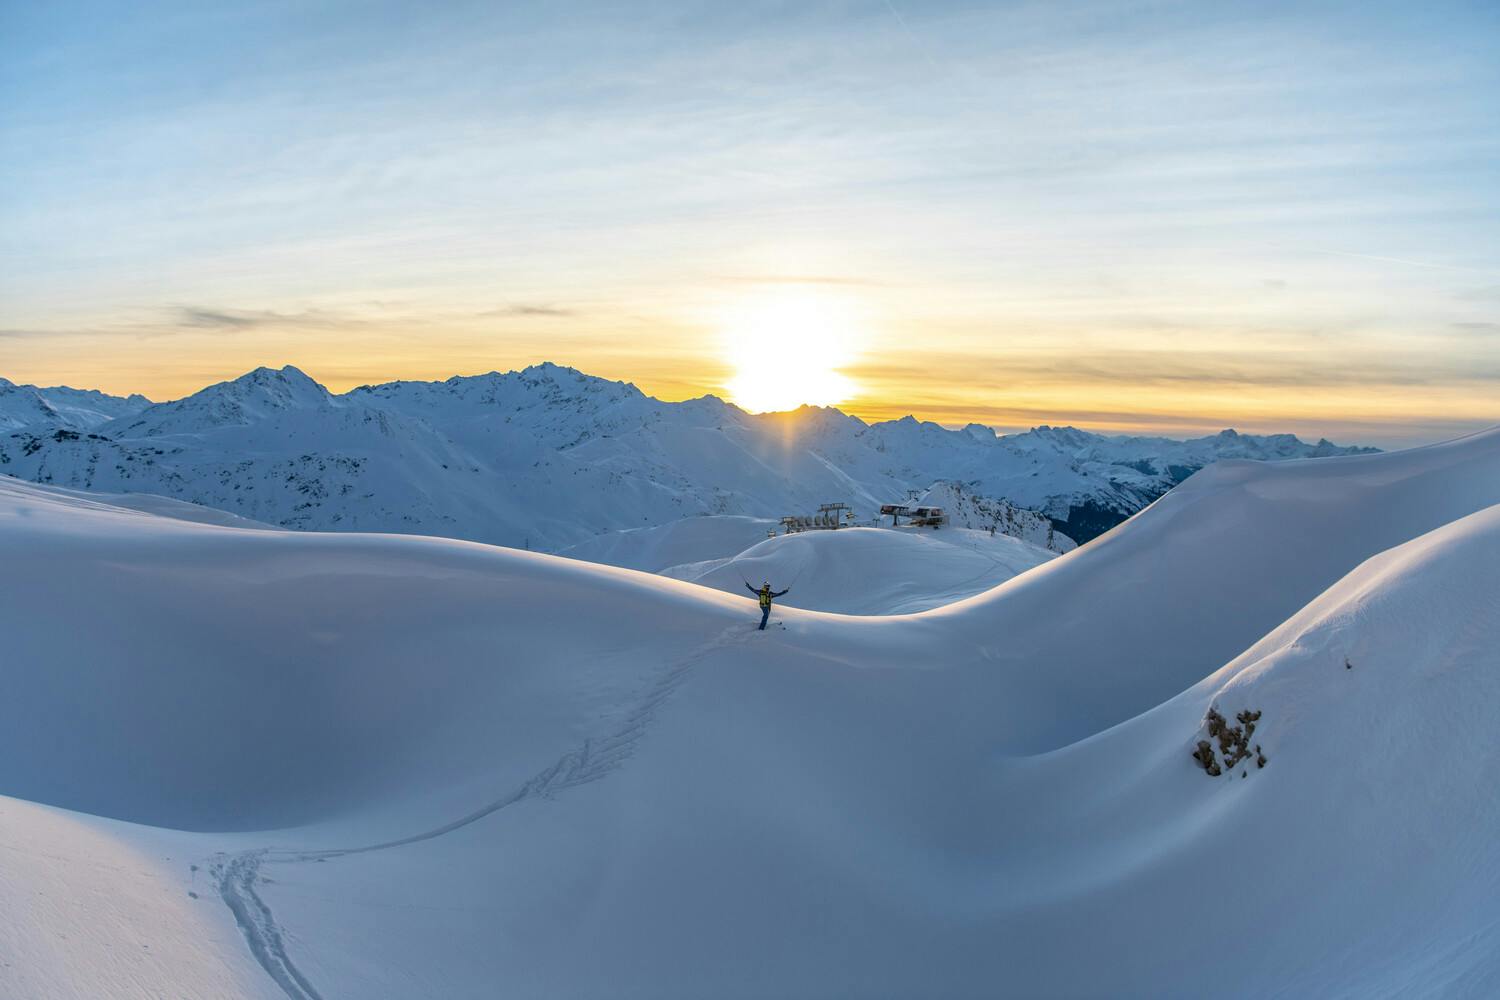 Isolated skiier raising arms at stunning sunset scenery in St Anton